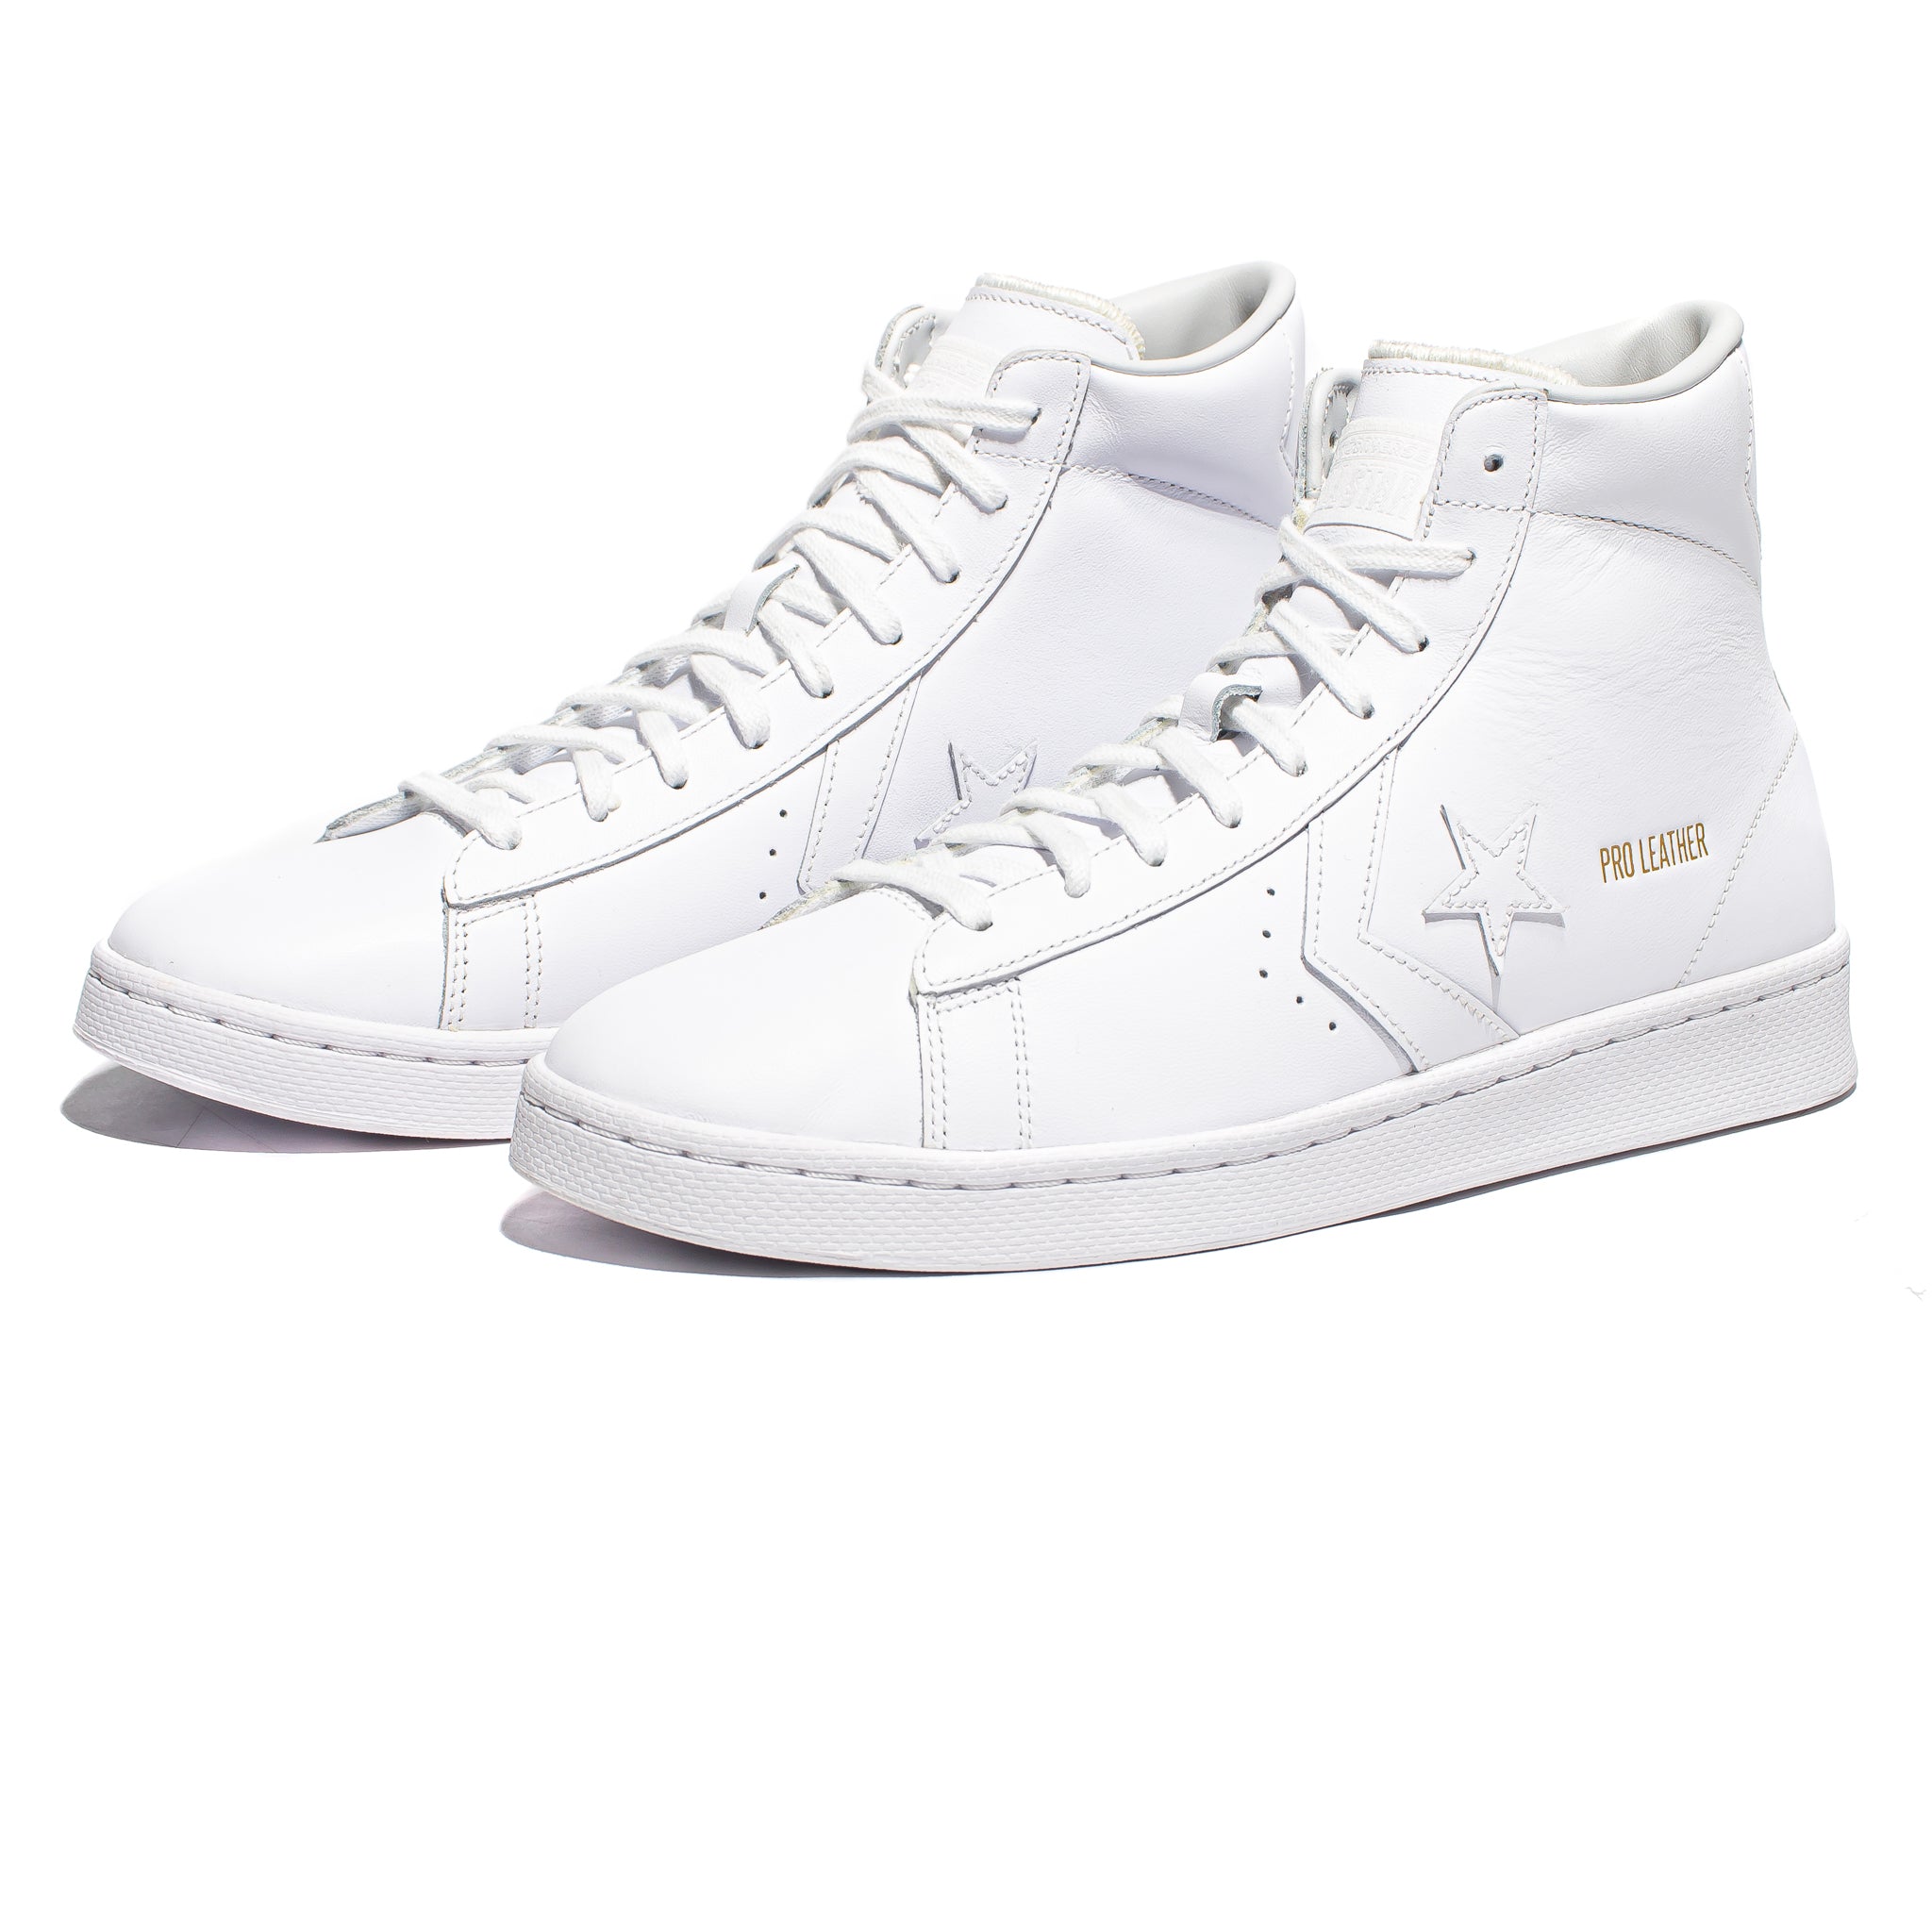 Converse Pro Leather Mid - White/White